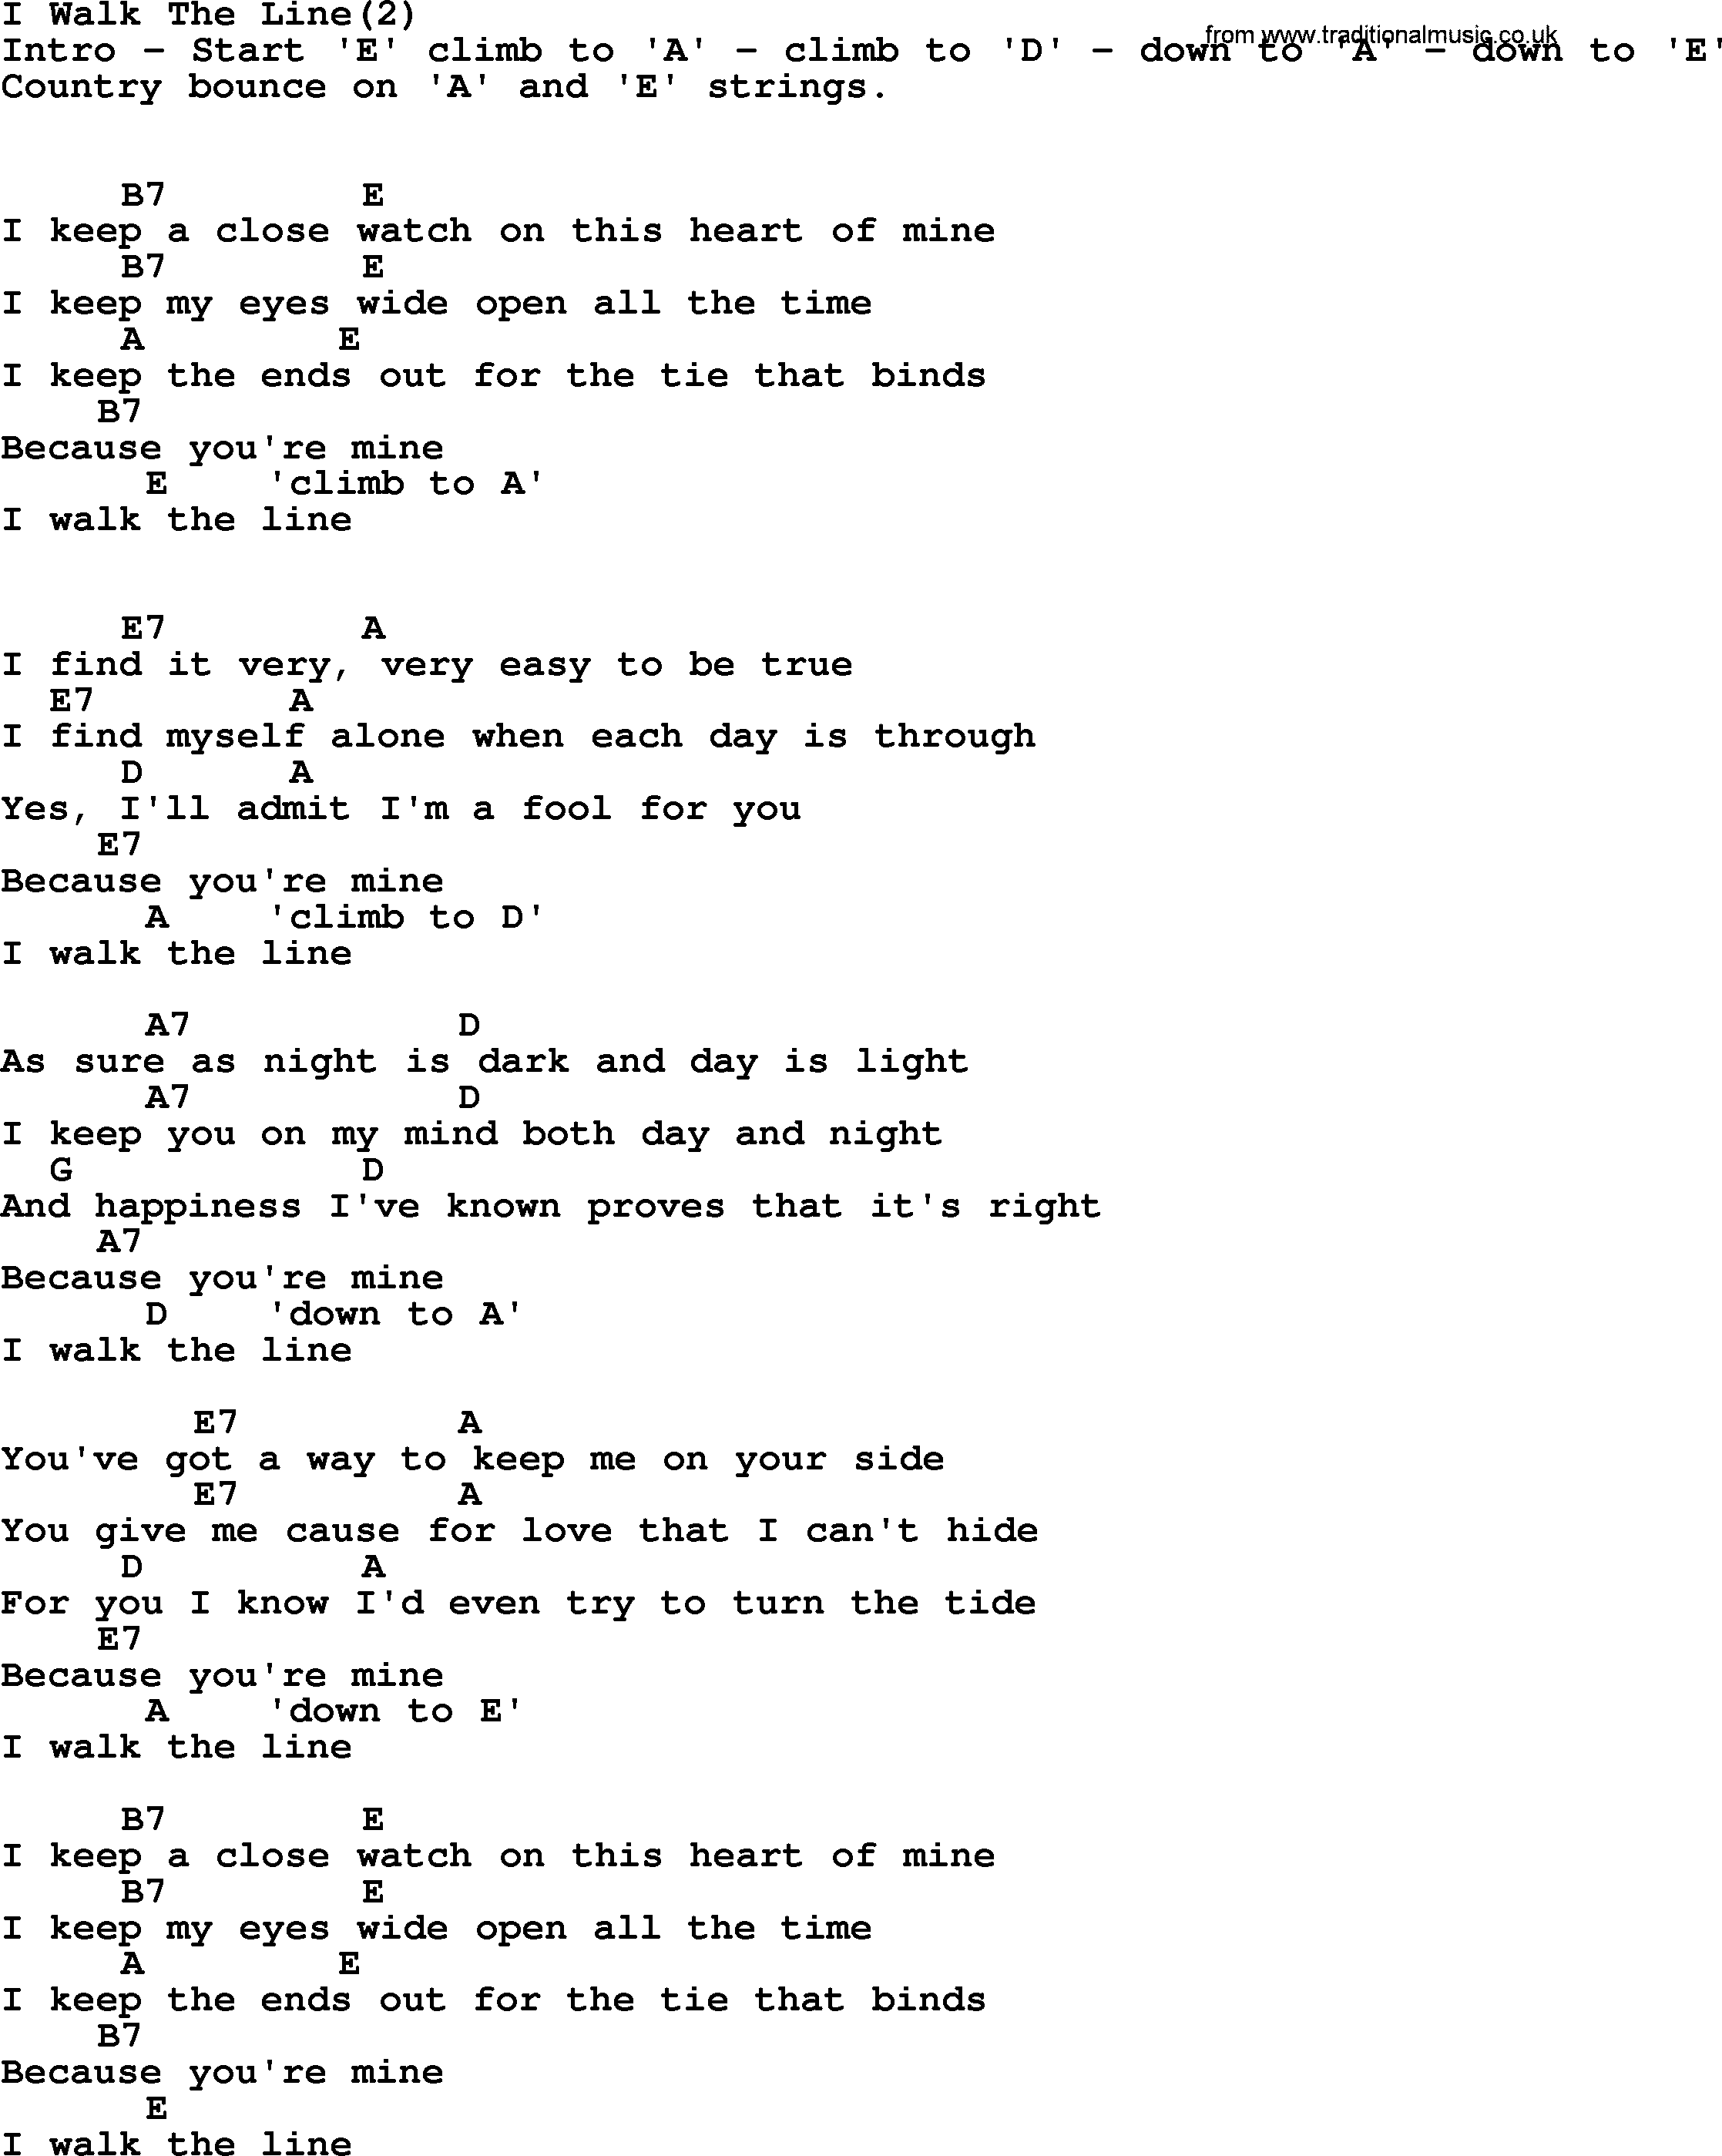 Johnny Cash song I Walk The Line(2), lyrics and chords